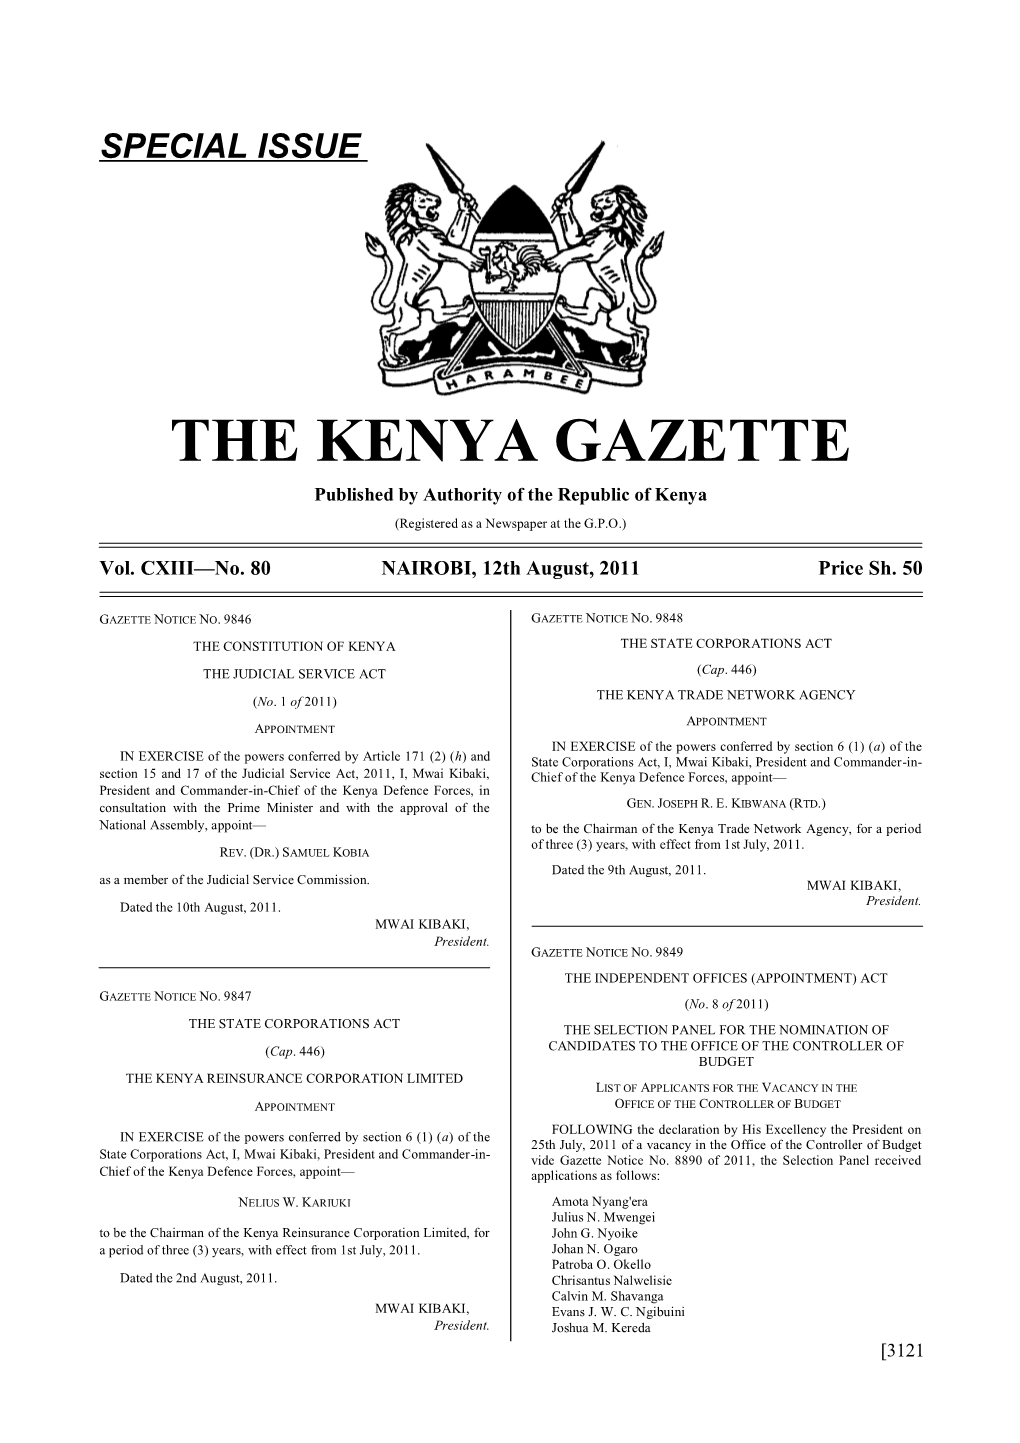 Special Issue the Kenya Gazette